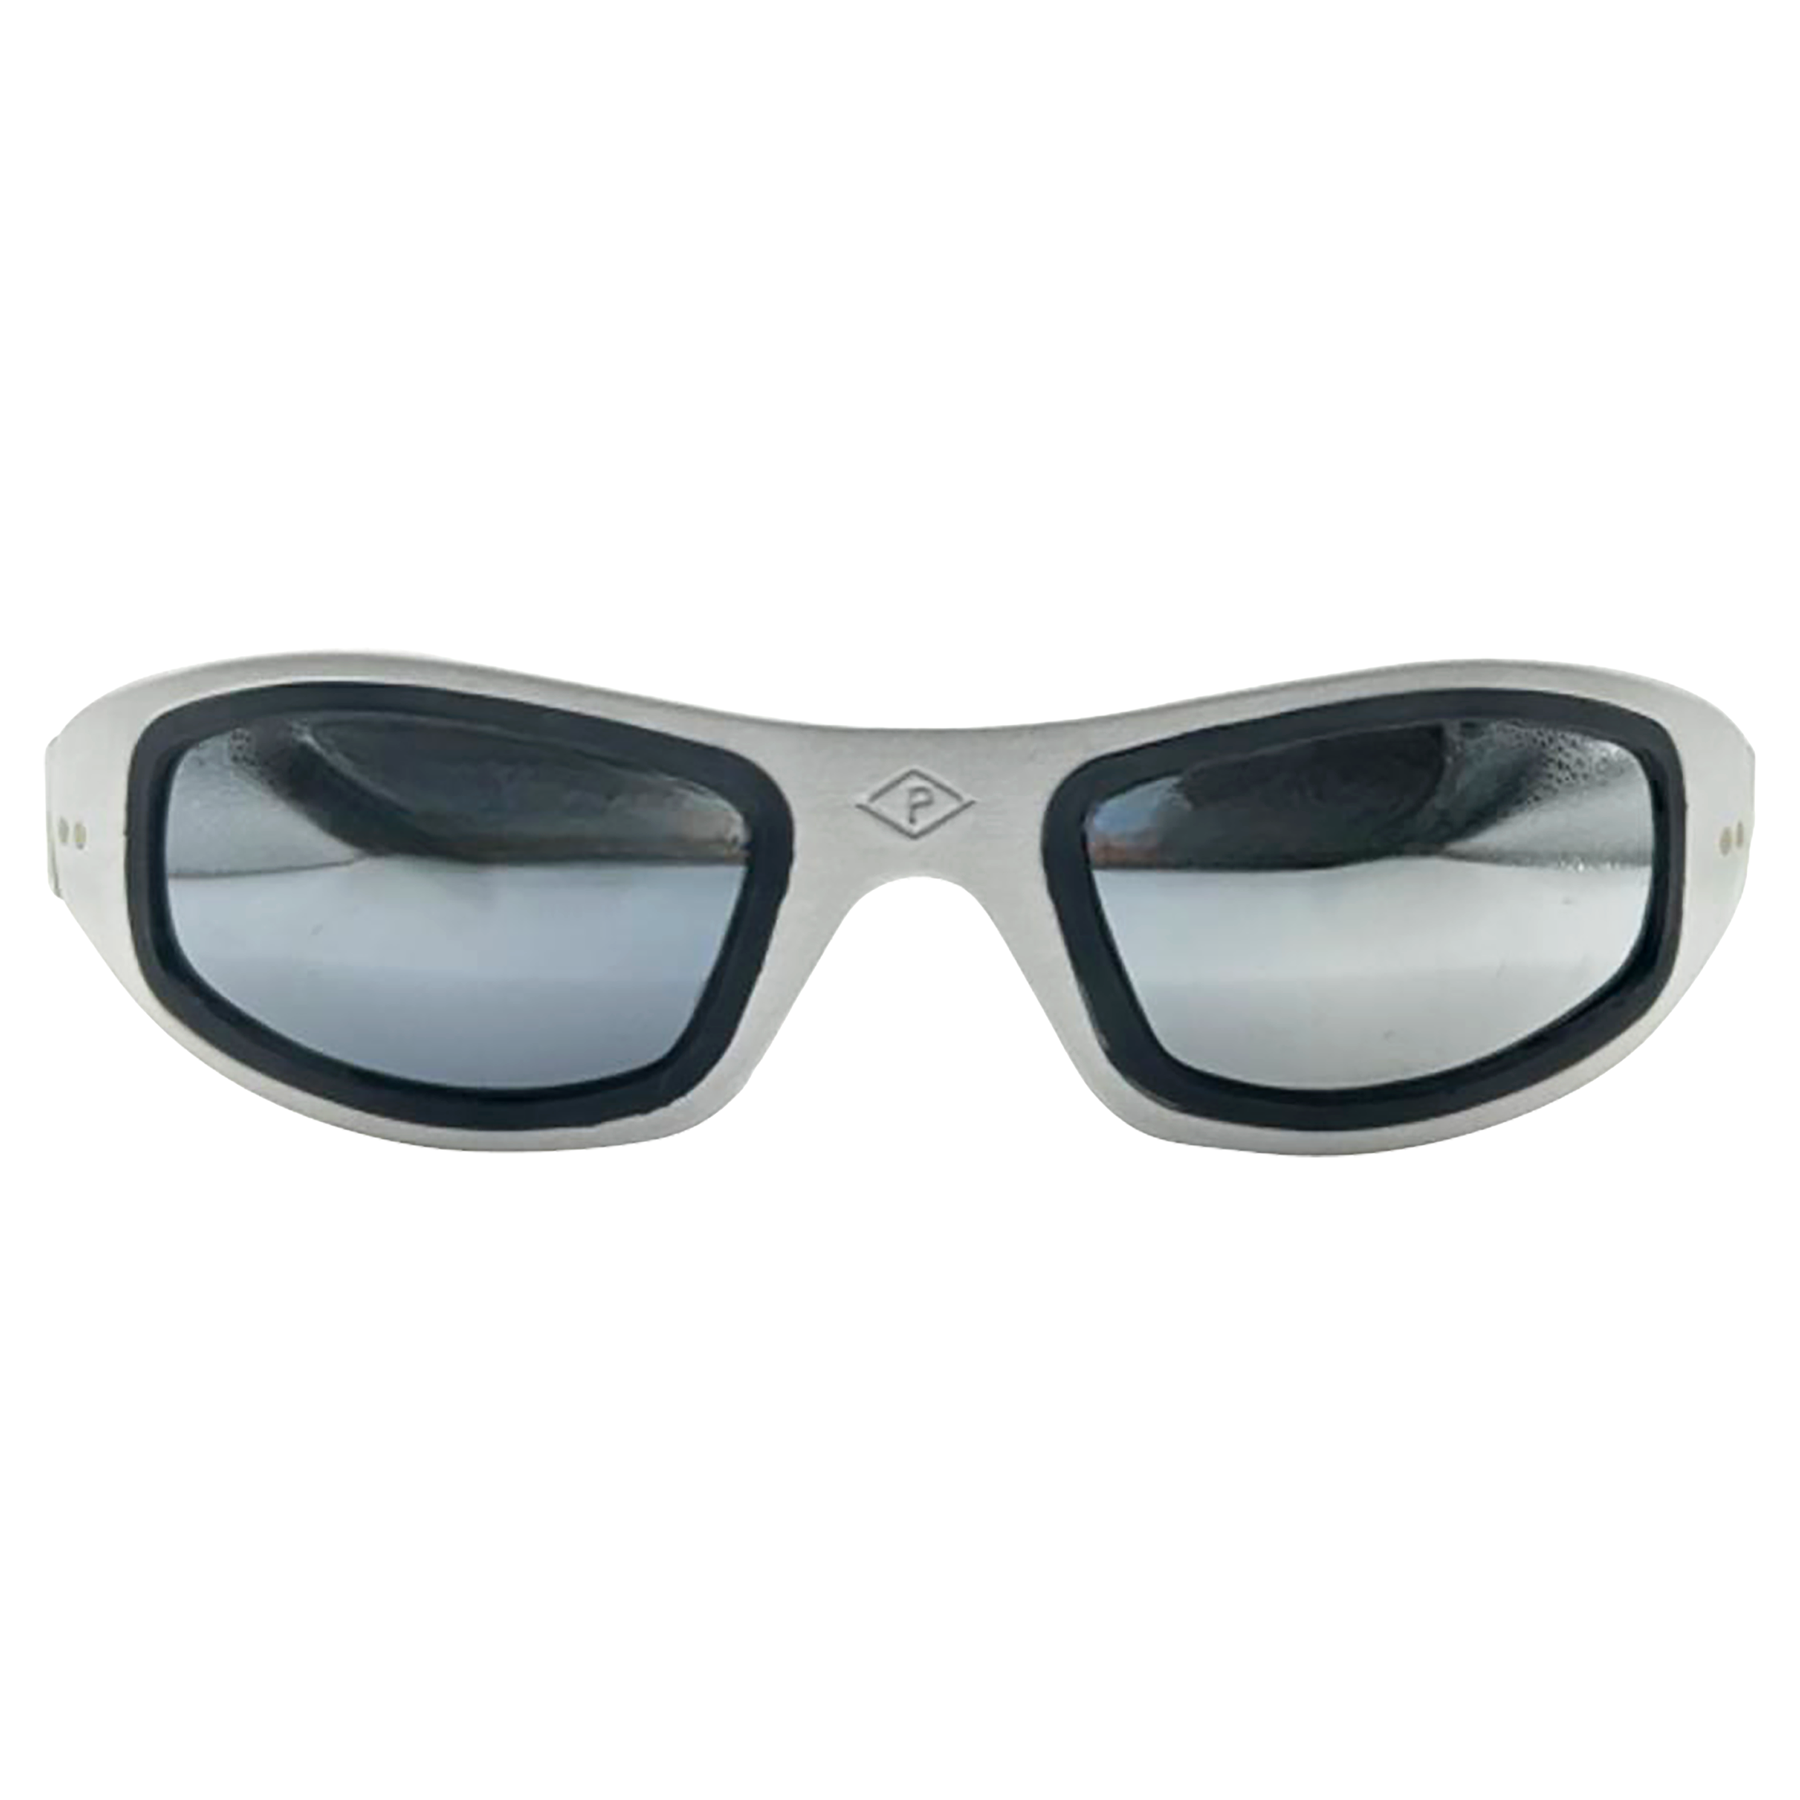 PRESSURE Square Futuristic Wraparound Sunglasses